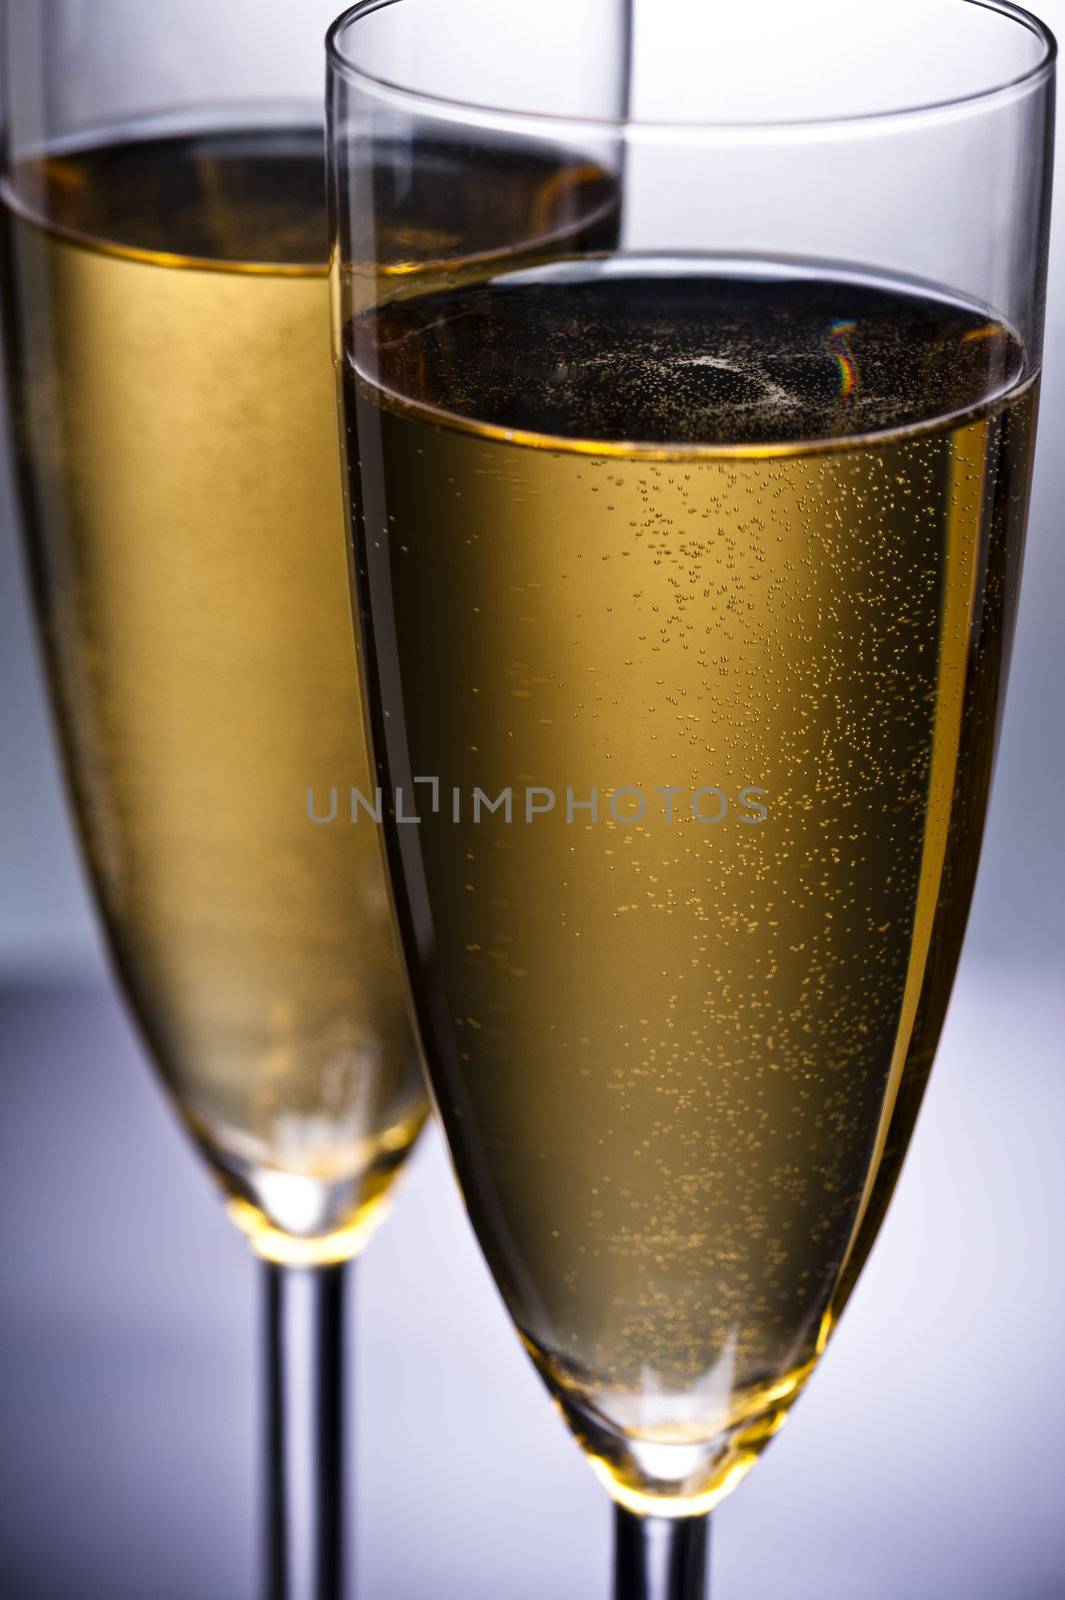 Champagne glasses by 3523Studio